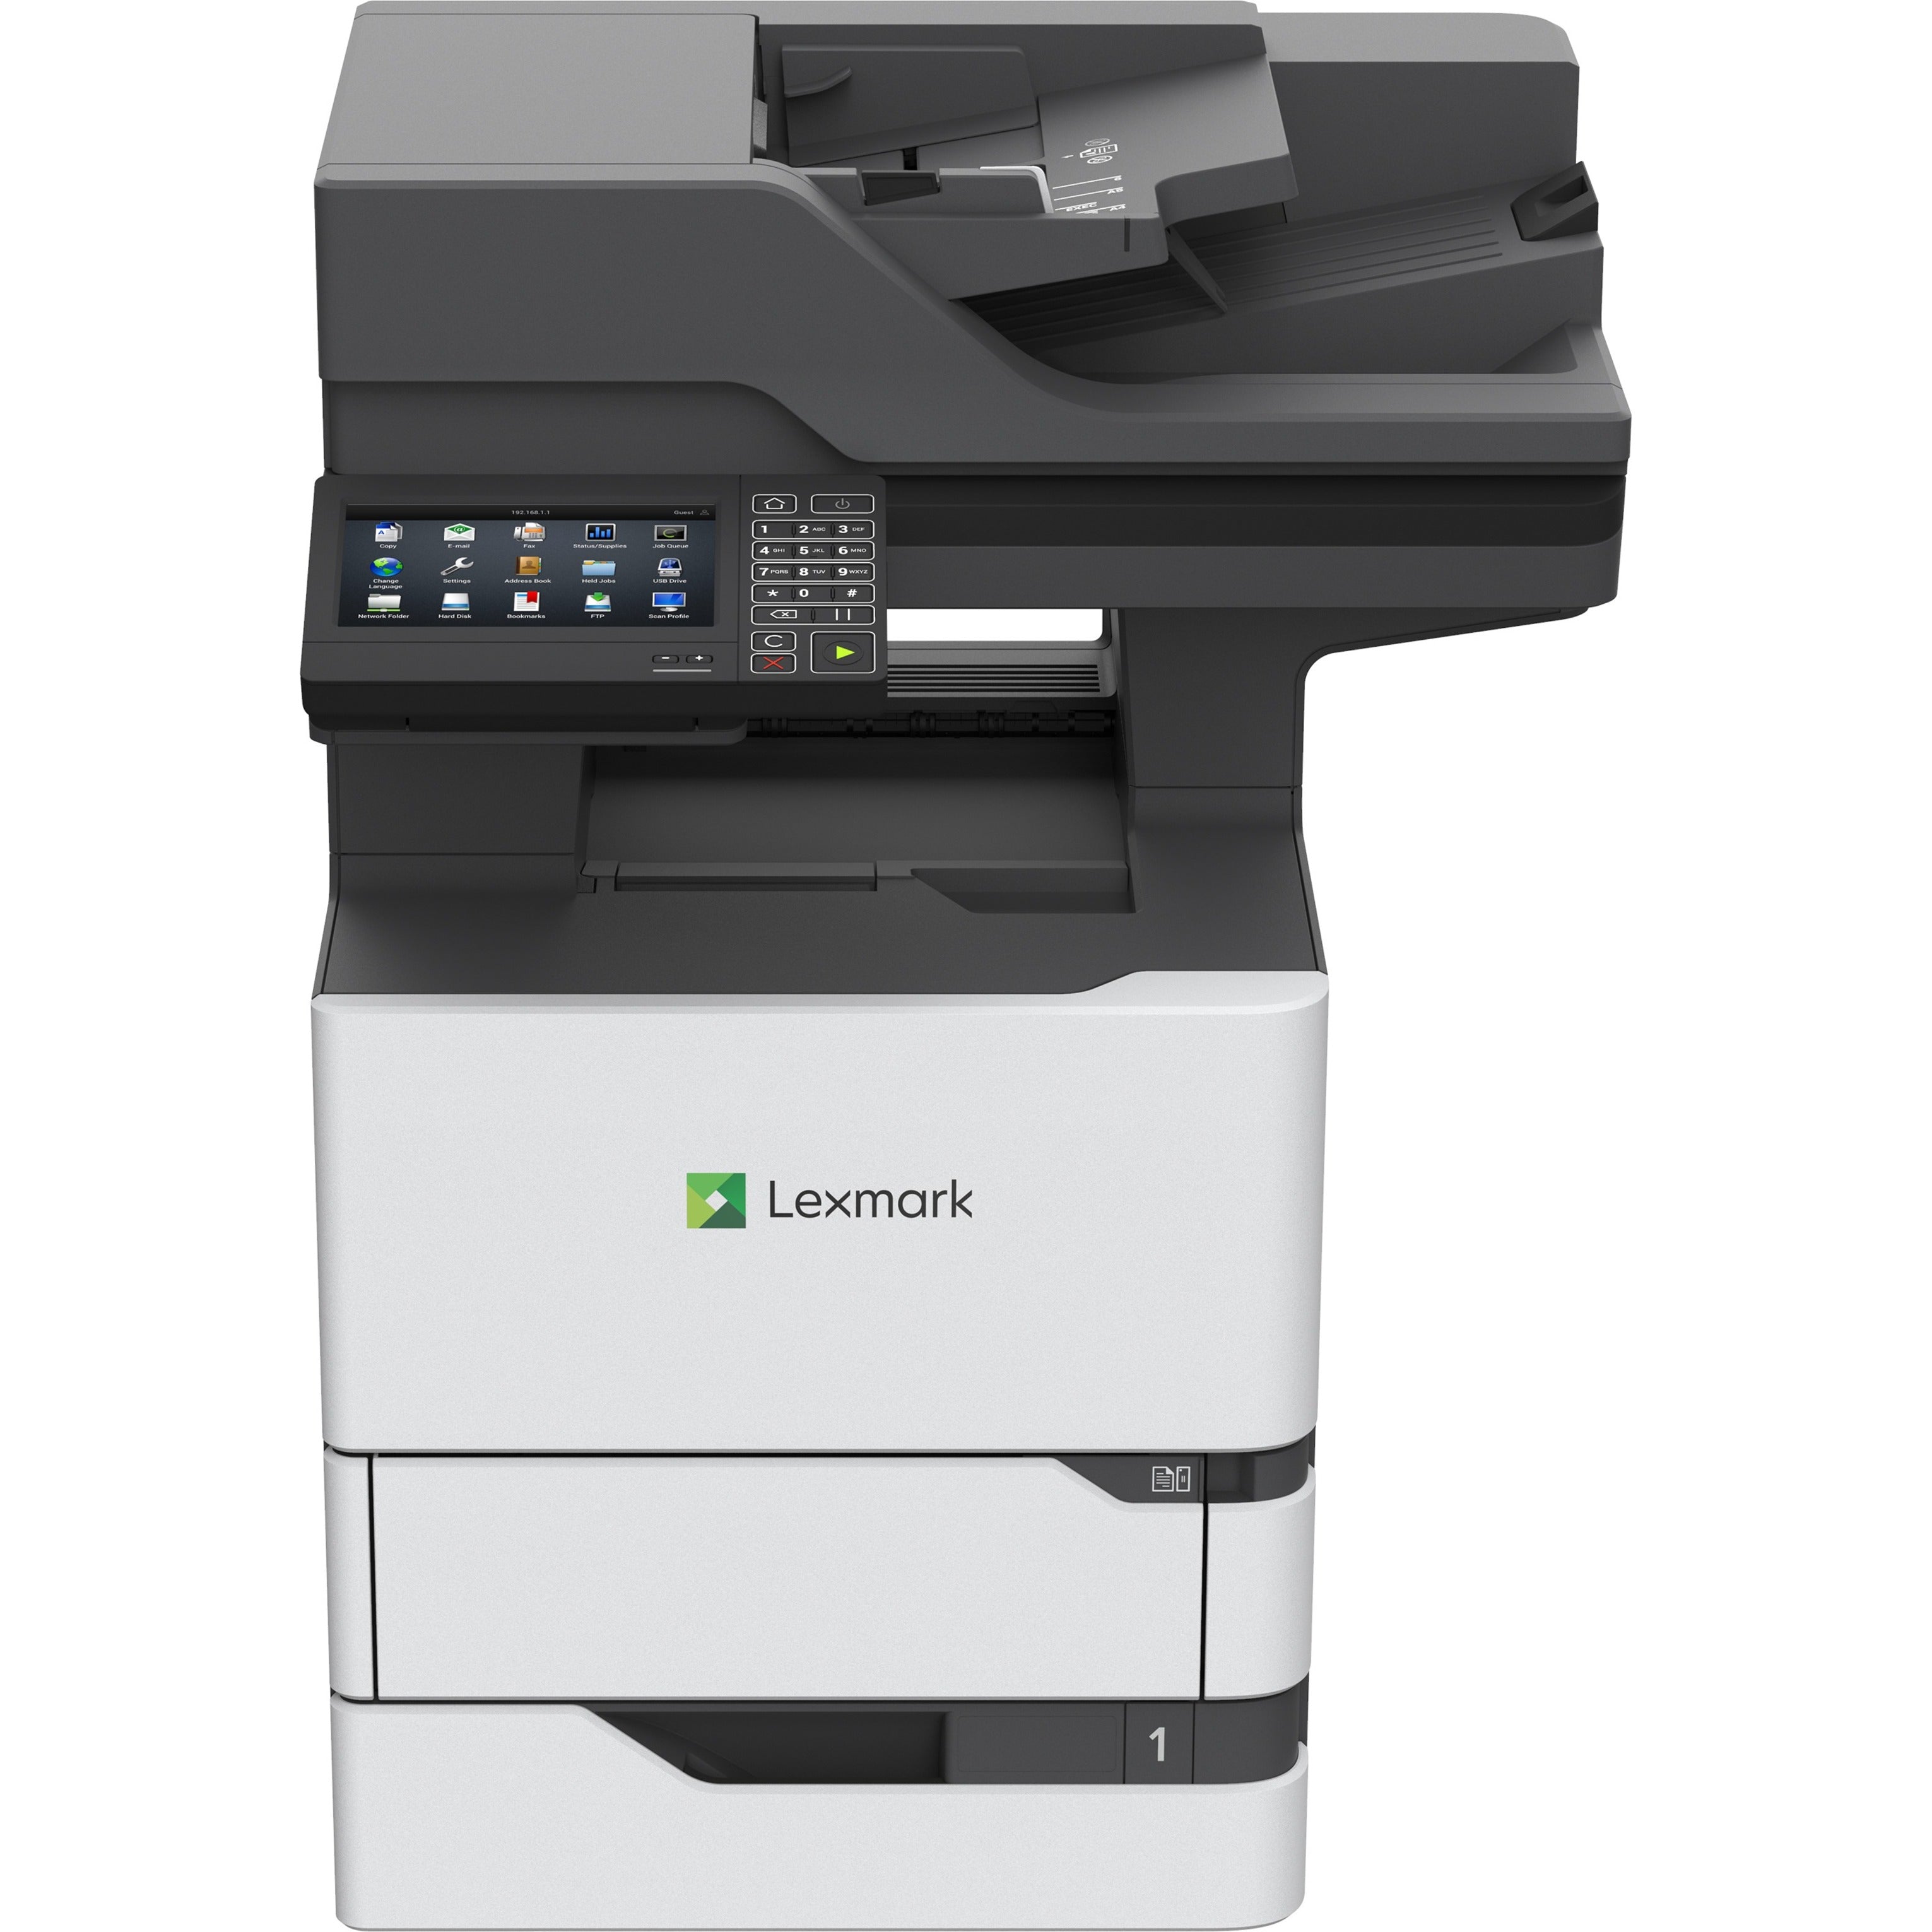 Lexmark 25BT016 MX721adhe Laser Multifunction Printer, Monochrome, 65 ppm, 1200 x 1200 dpi